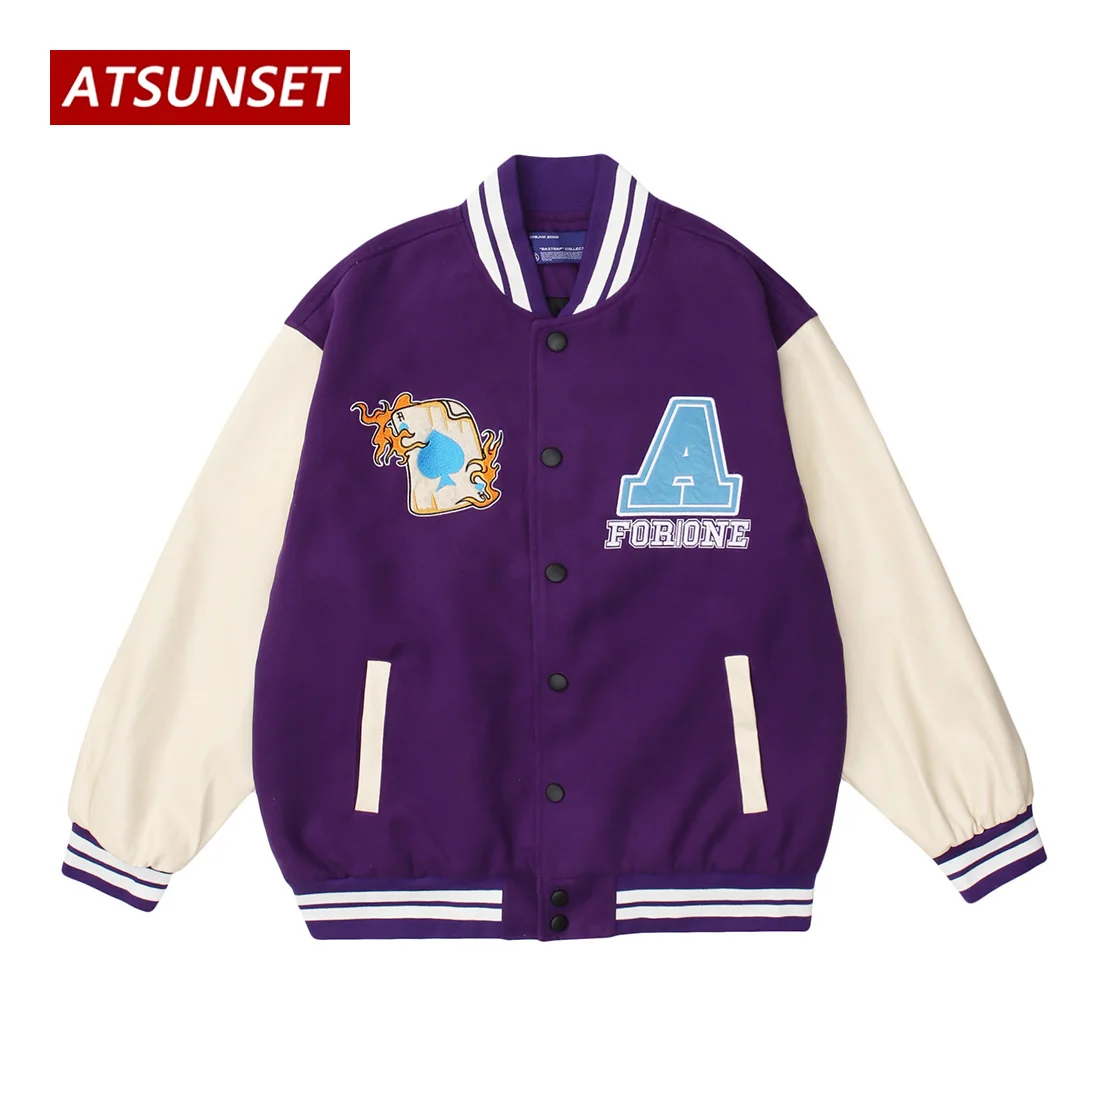 ATSUNSET Clown Embroidery Hip Hop Baseball Jacket Harajuku Retro Varsity Jacket Streetwear Fashion Cotton Jacket Coat Tops